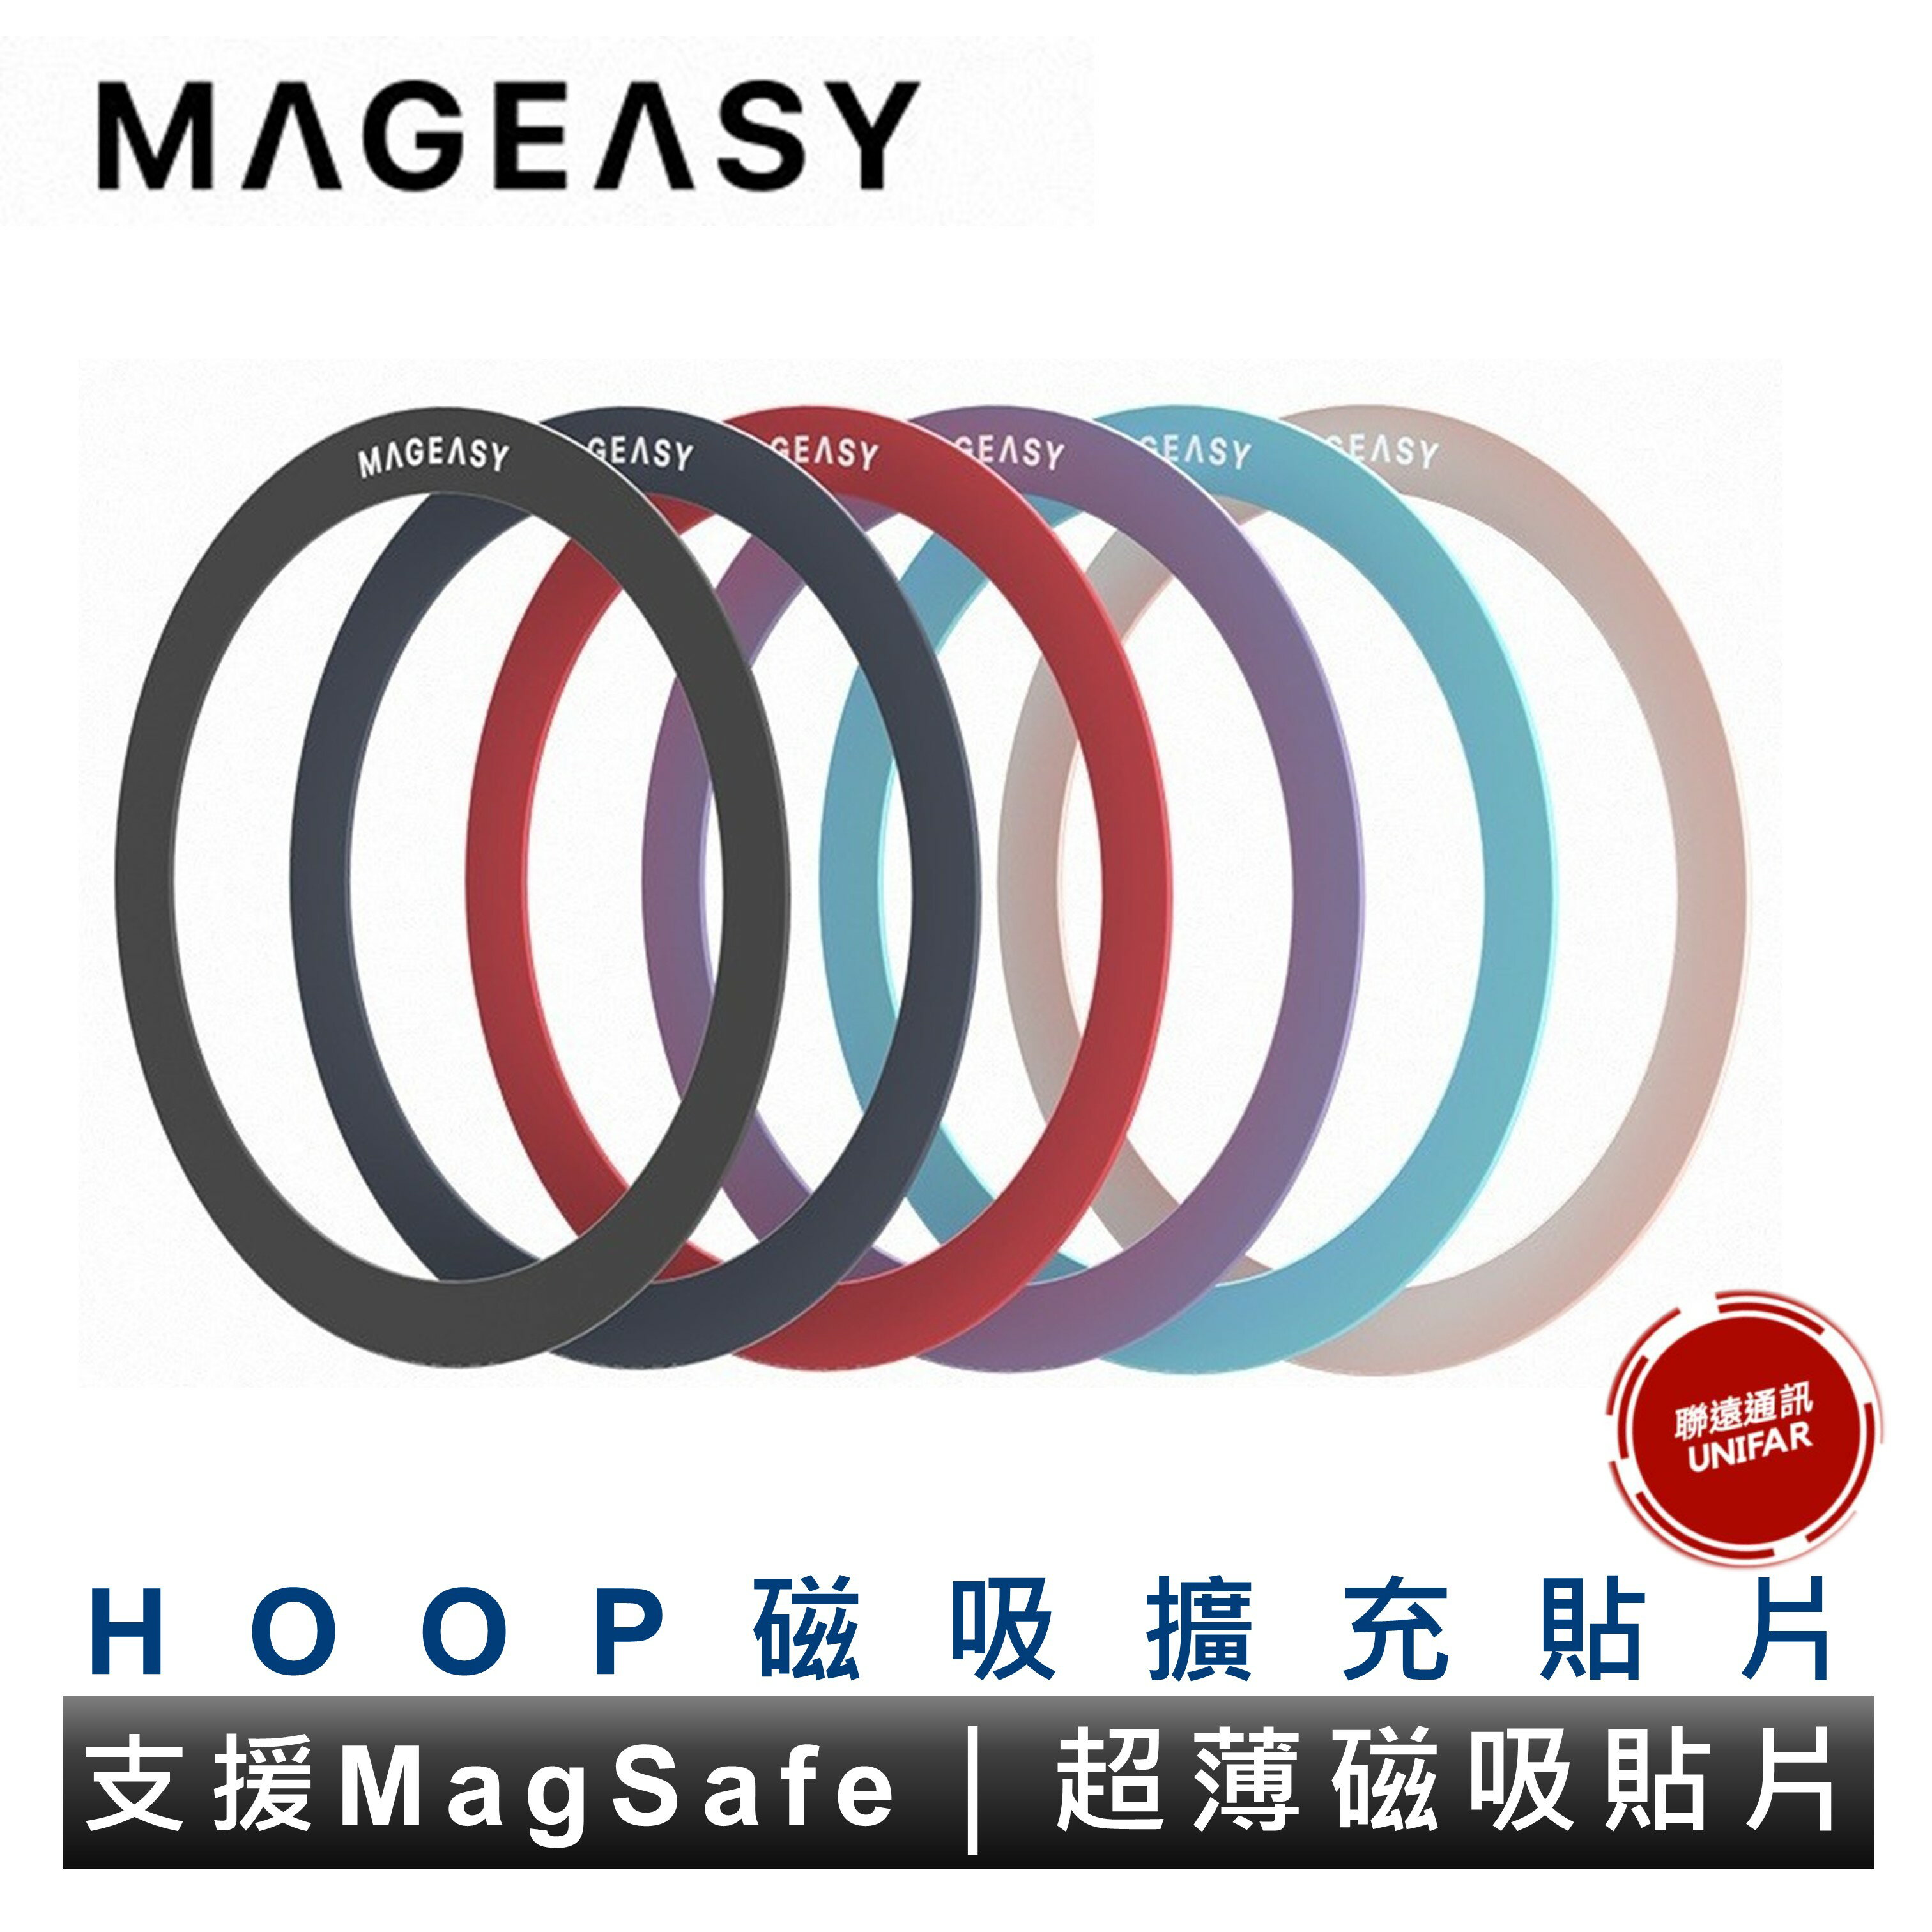 MAGEASY HOOP 支援MagSafe 磁吸擴充貼片 手機磁吸擴充貼片